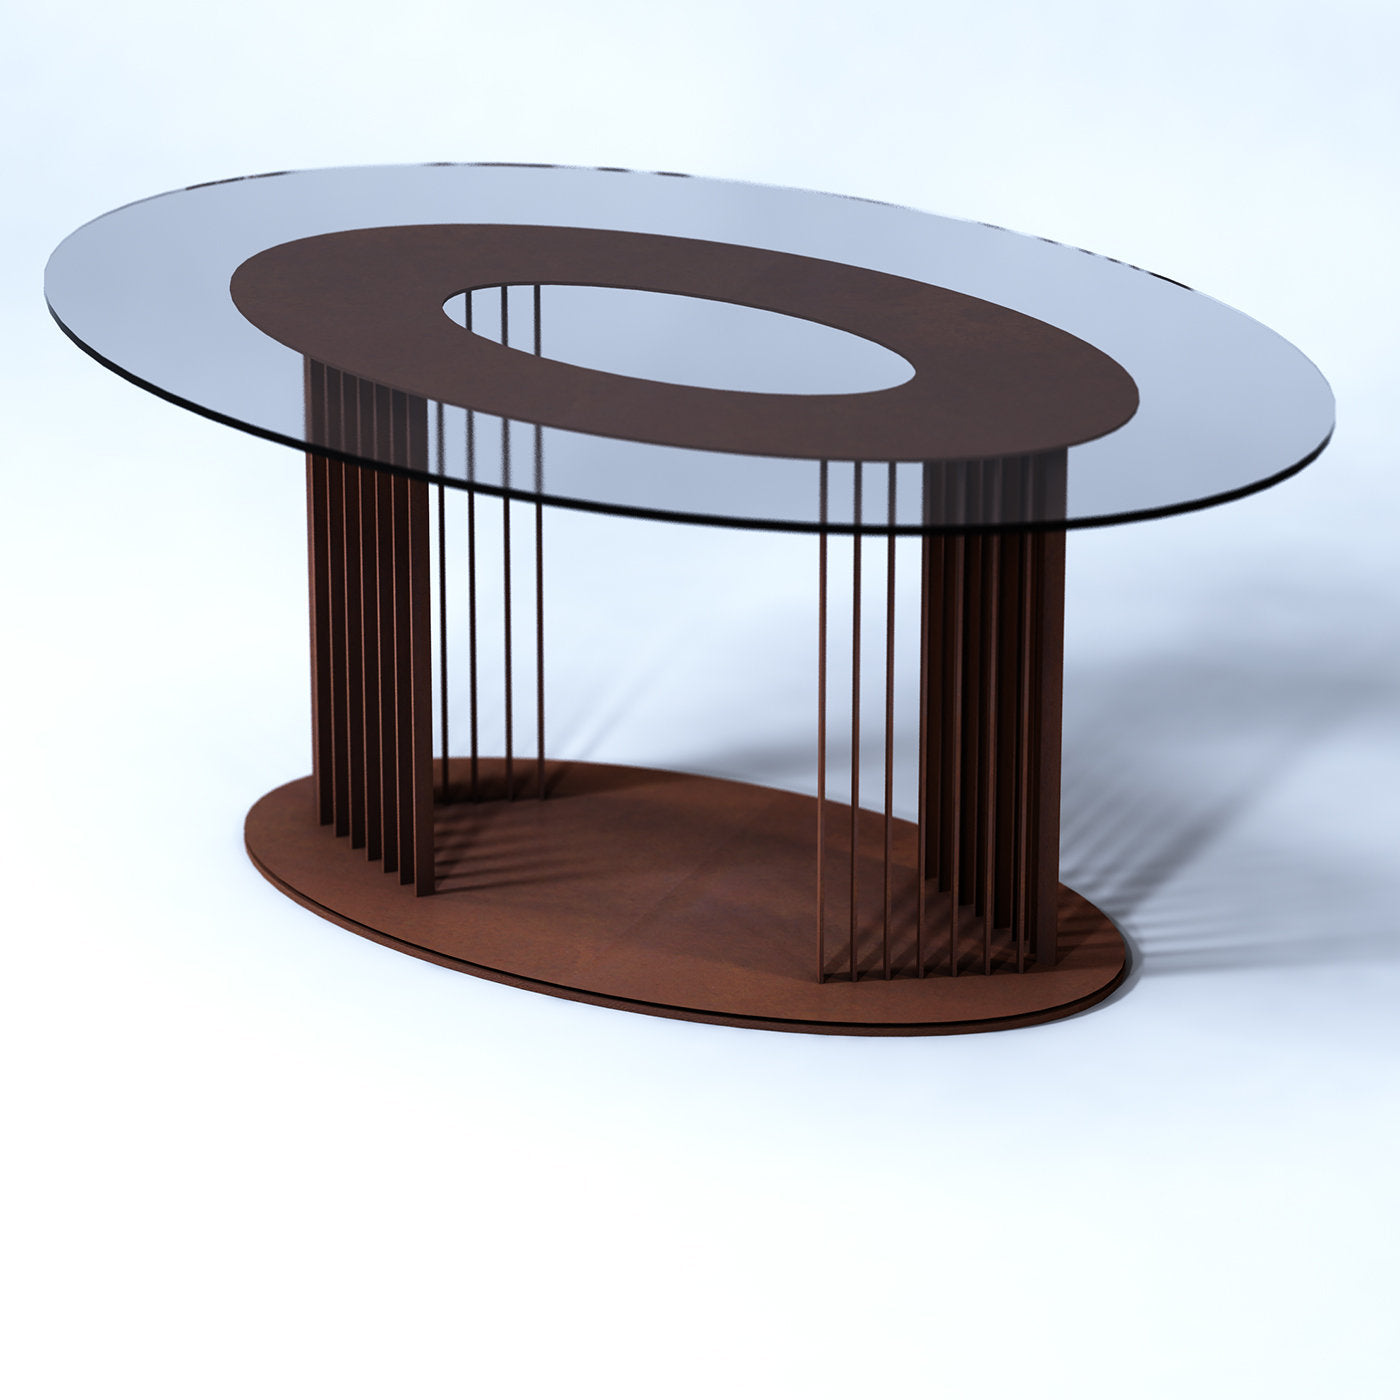 Ovov Corten Steel Coffee Table by Claudia Fanciullacci - Alternative view 1